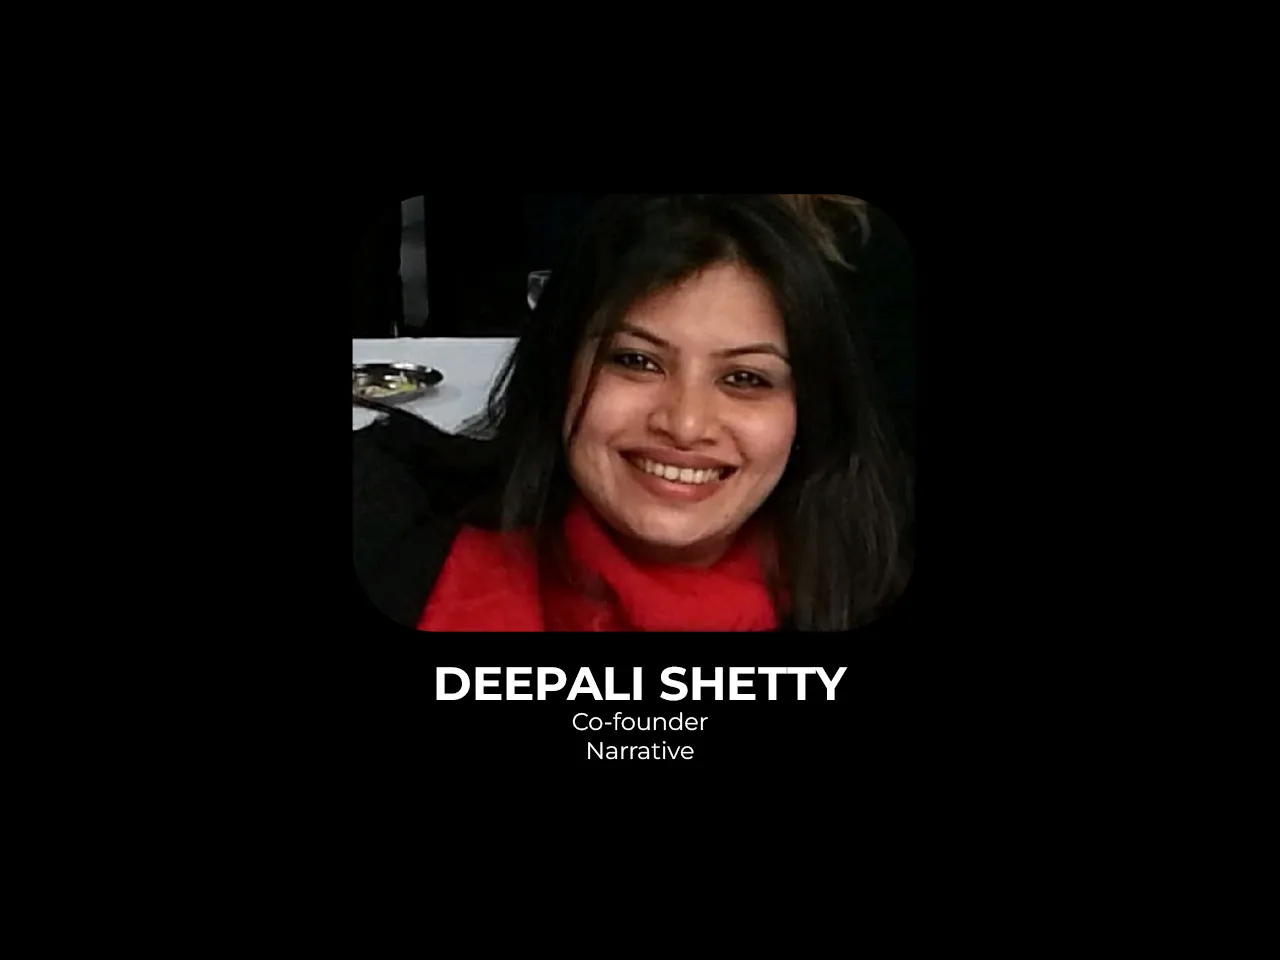 Deepali Shetty